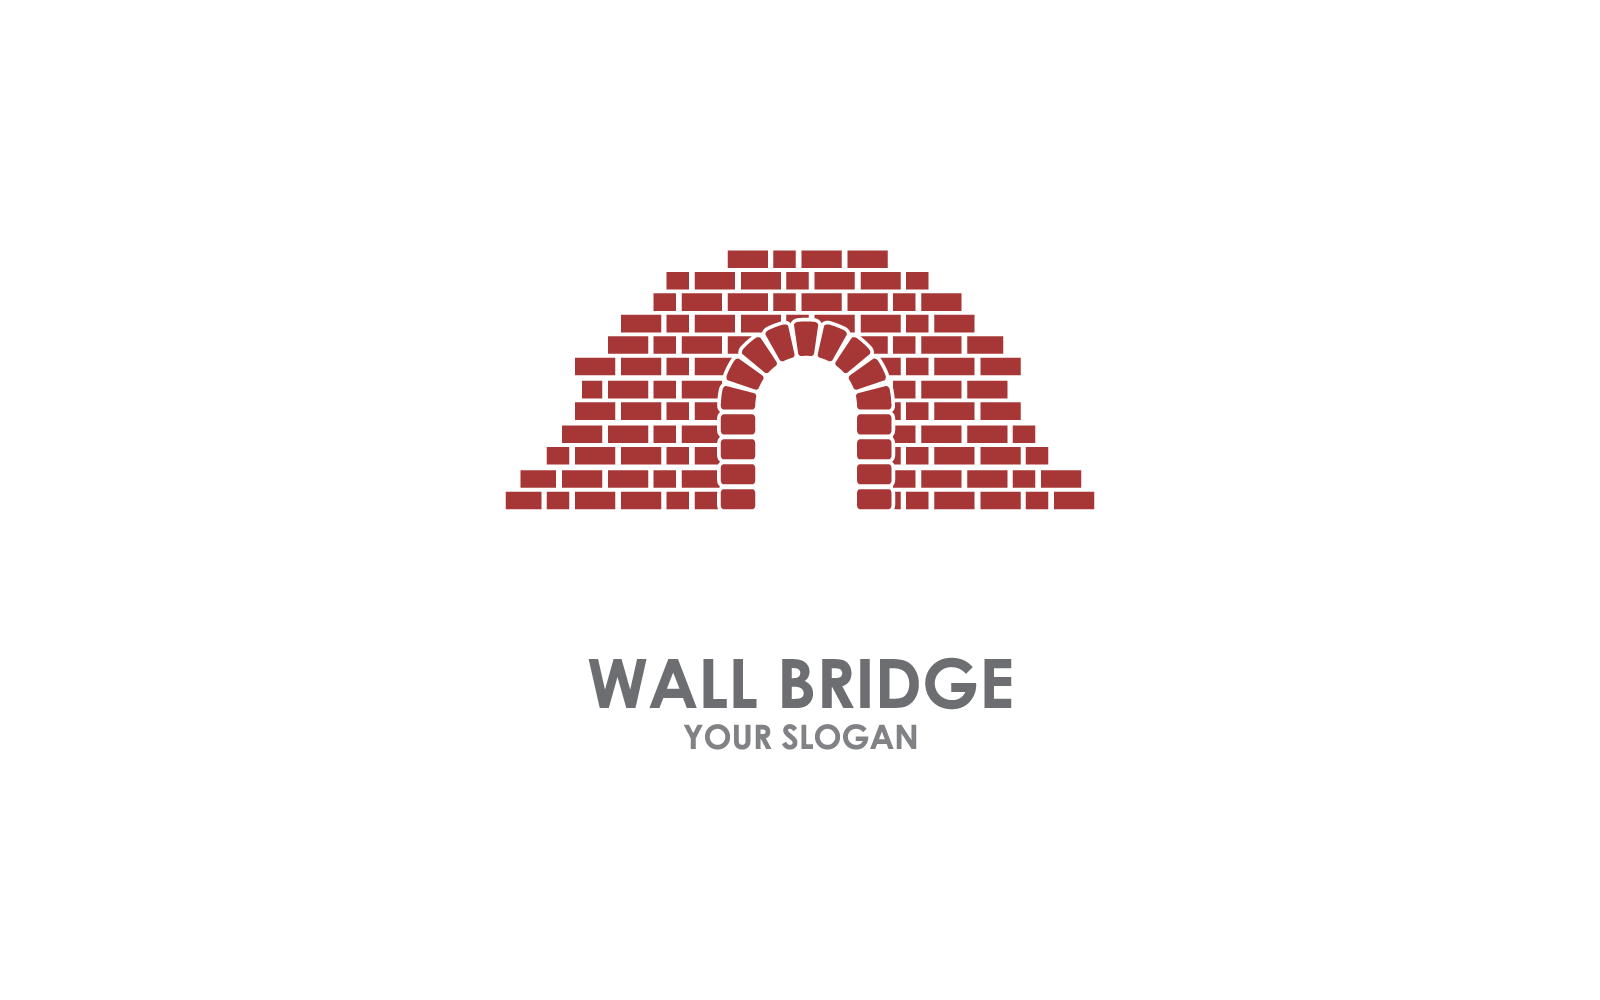 Wall bridge logo illustration vector design template